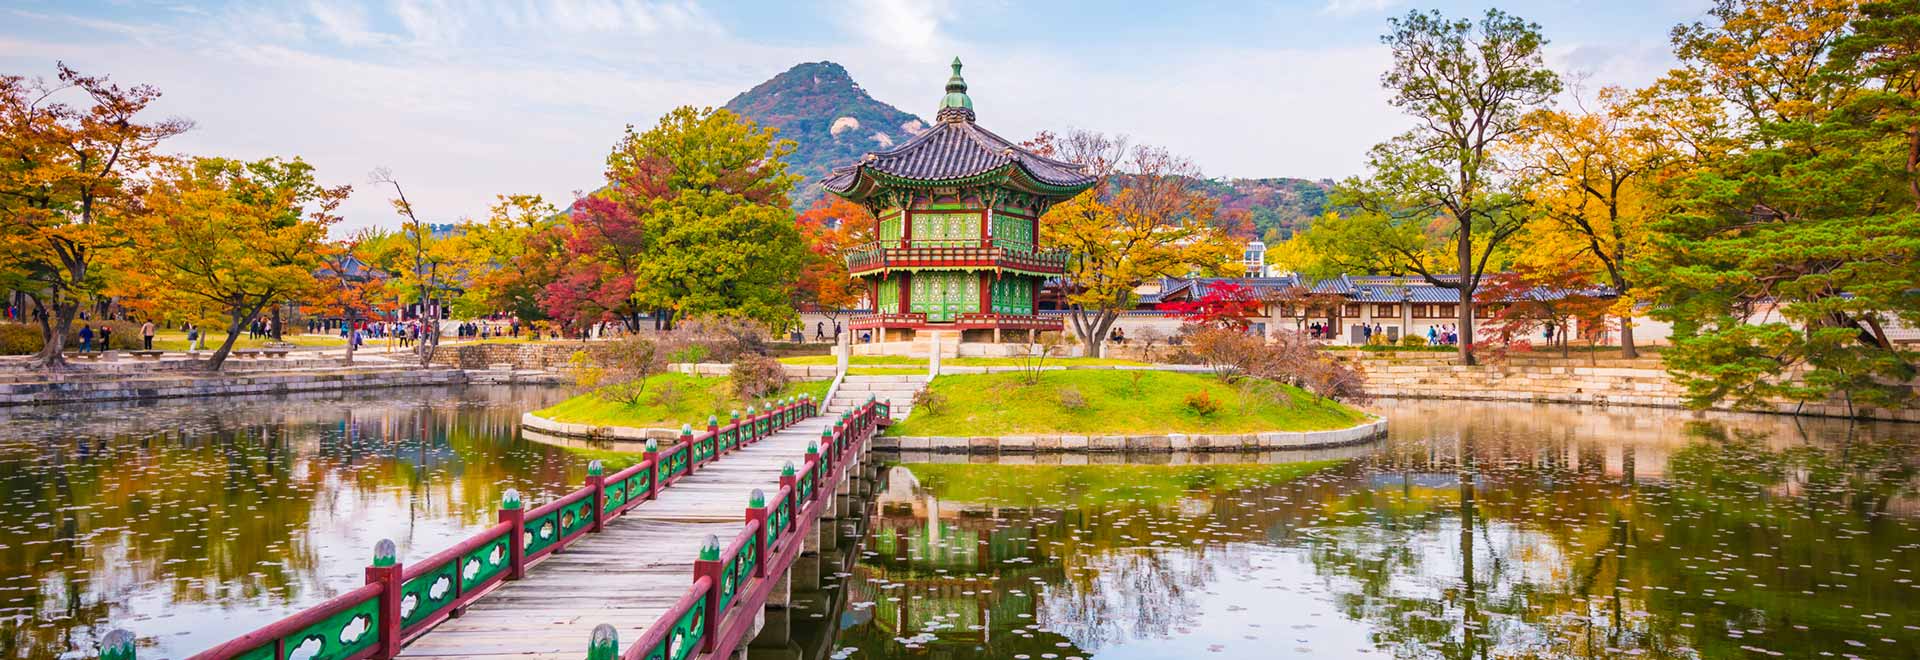 Asia South Korea Seoul Gyeongbokgung Palace